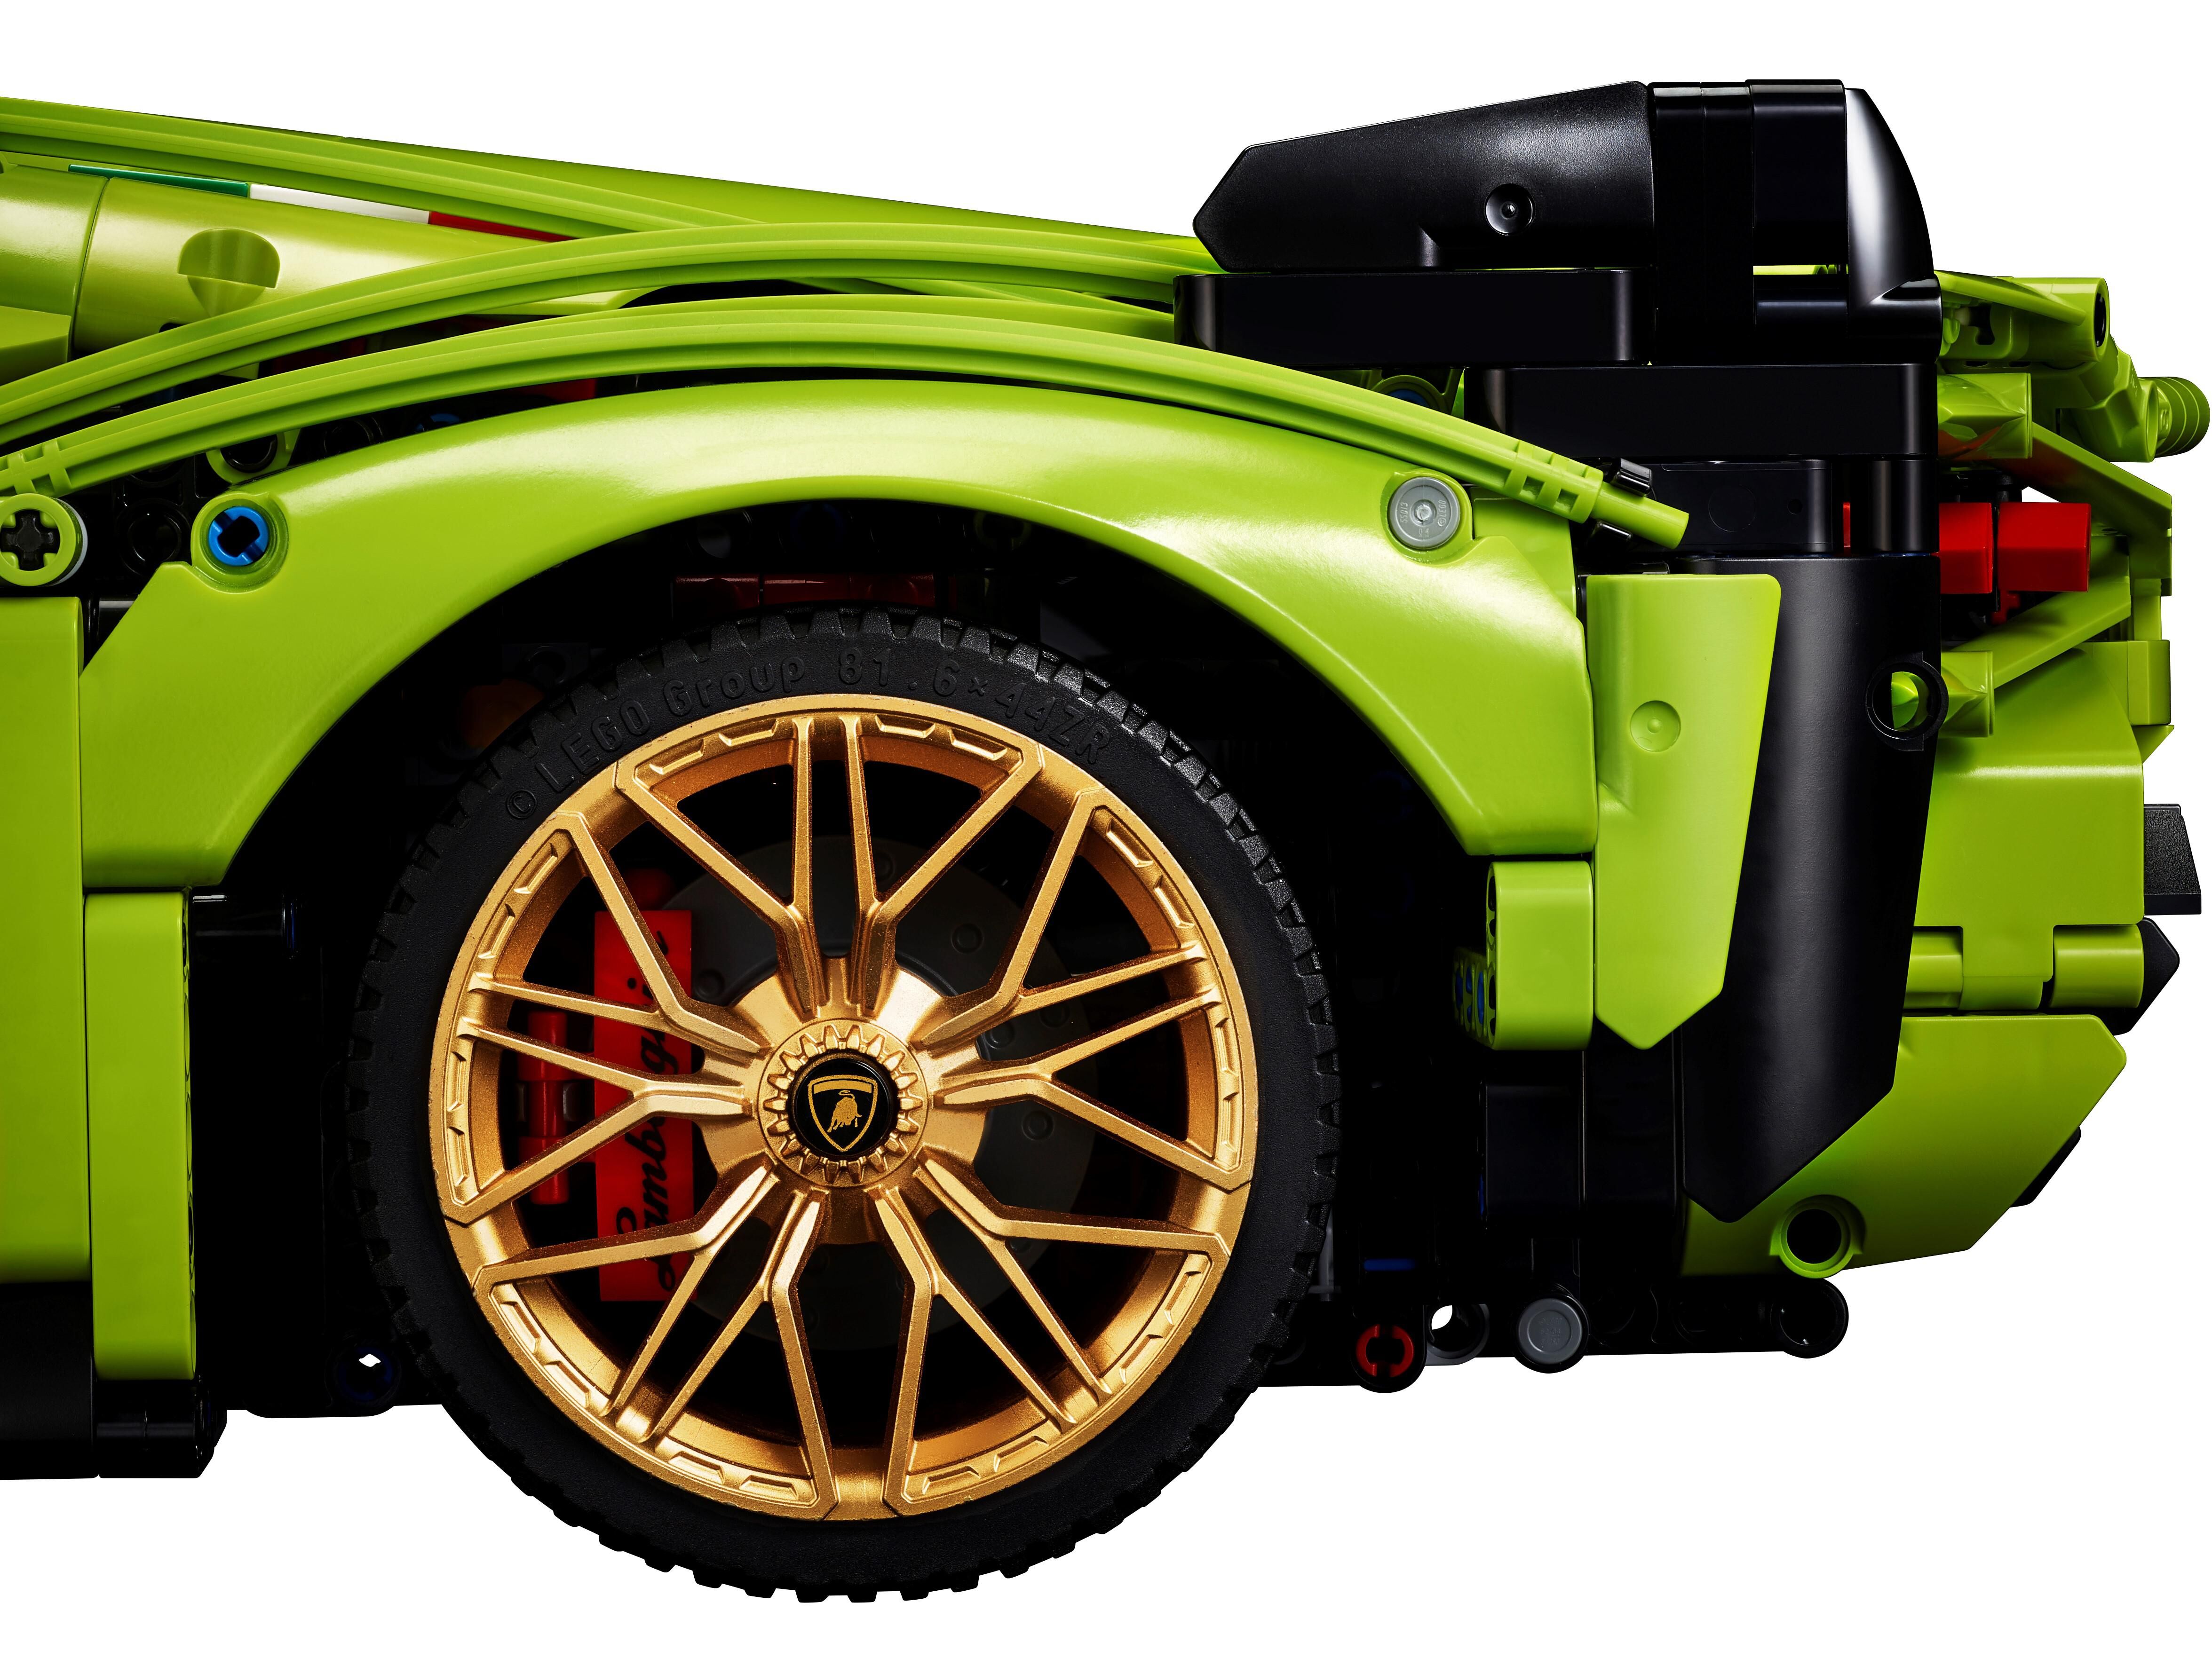 LEGO® Lamborghini Sián FKP 37 42115